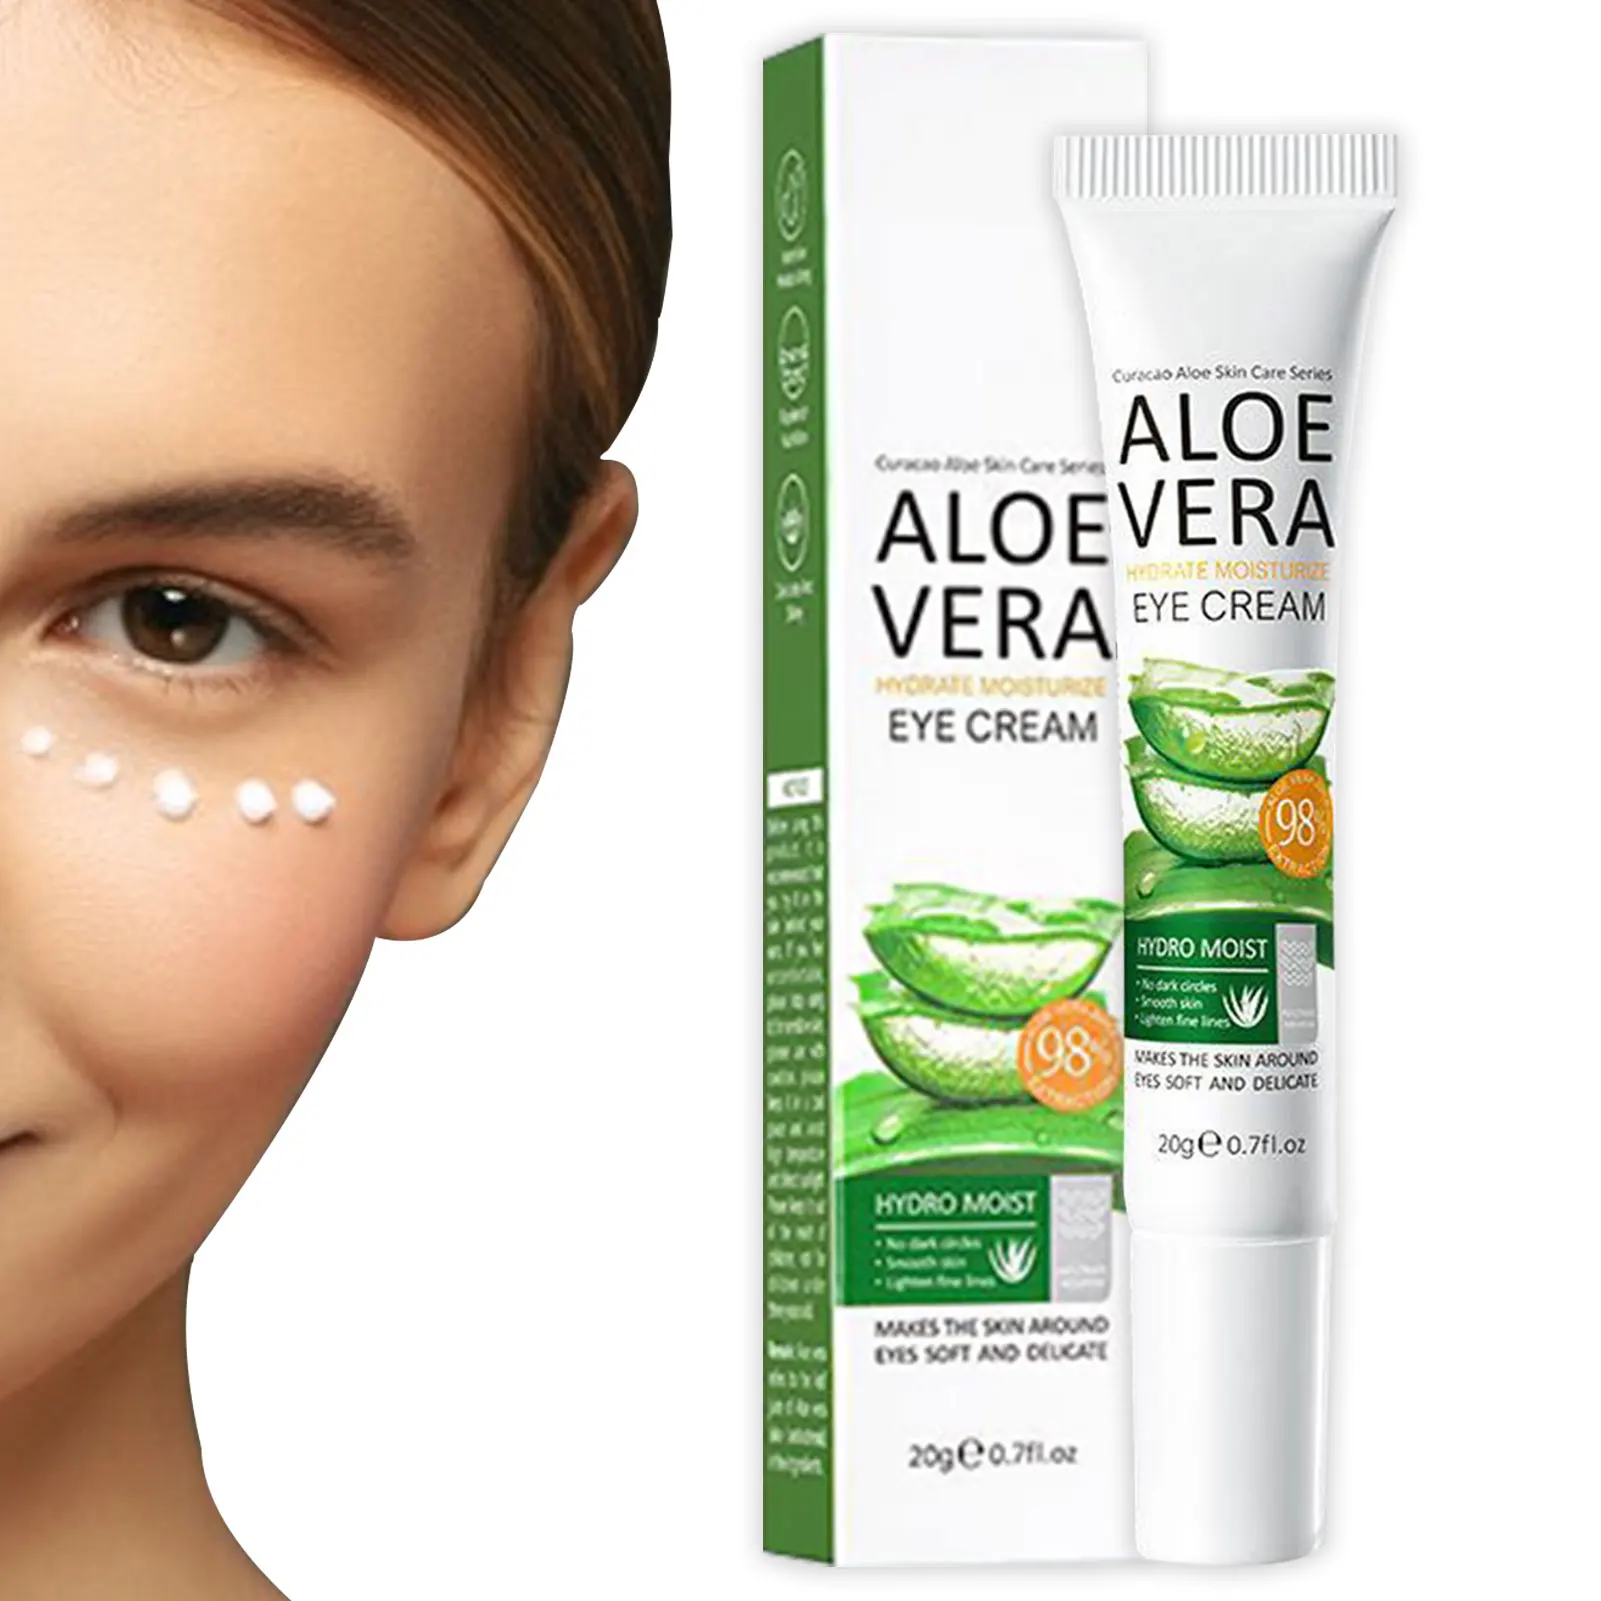 

Eye Cream Aloe Essence 20g Organic Aloe Vera Eye Cream Gel Moisturizing Gel Anti Wrinkles Dark Circles Puffiness Skin Care